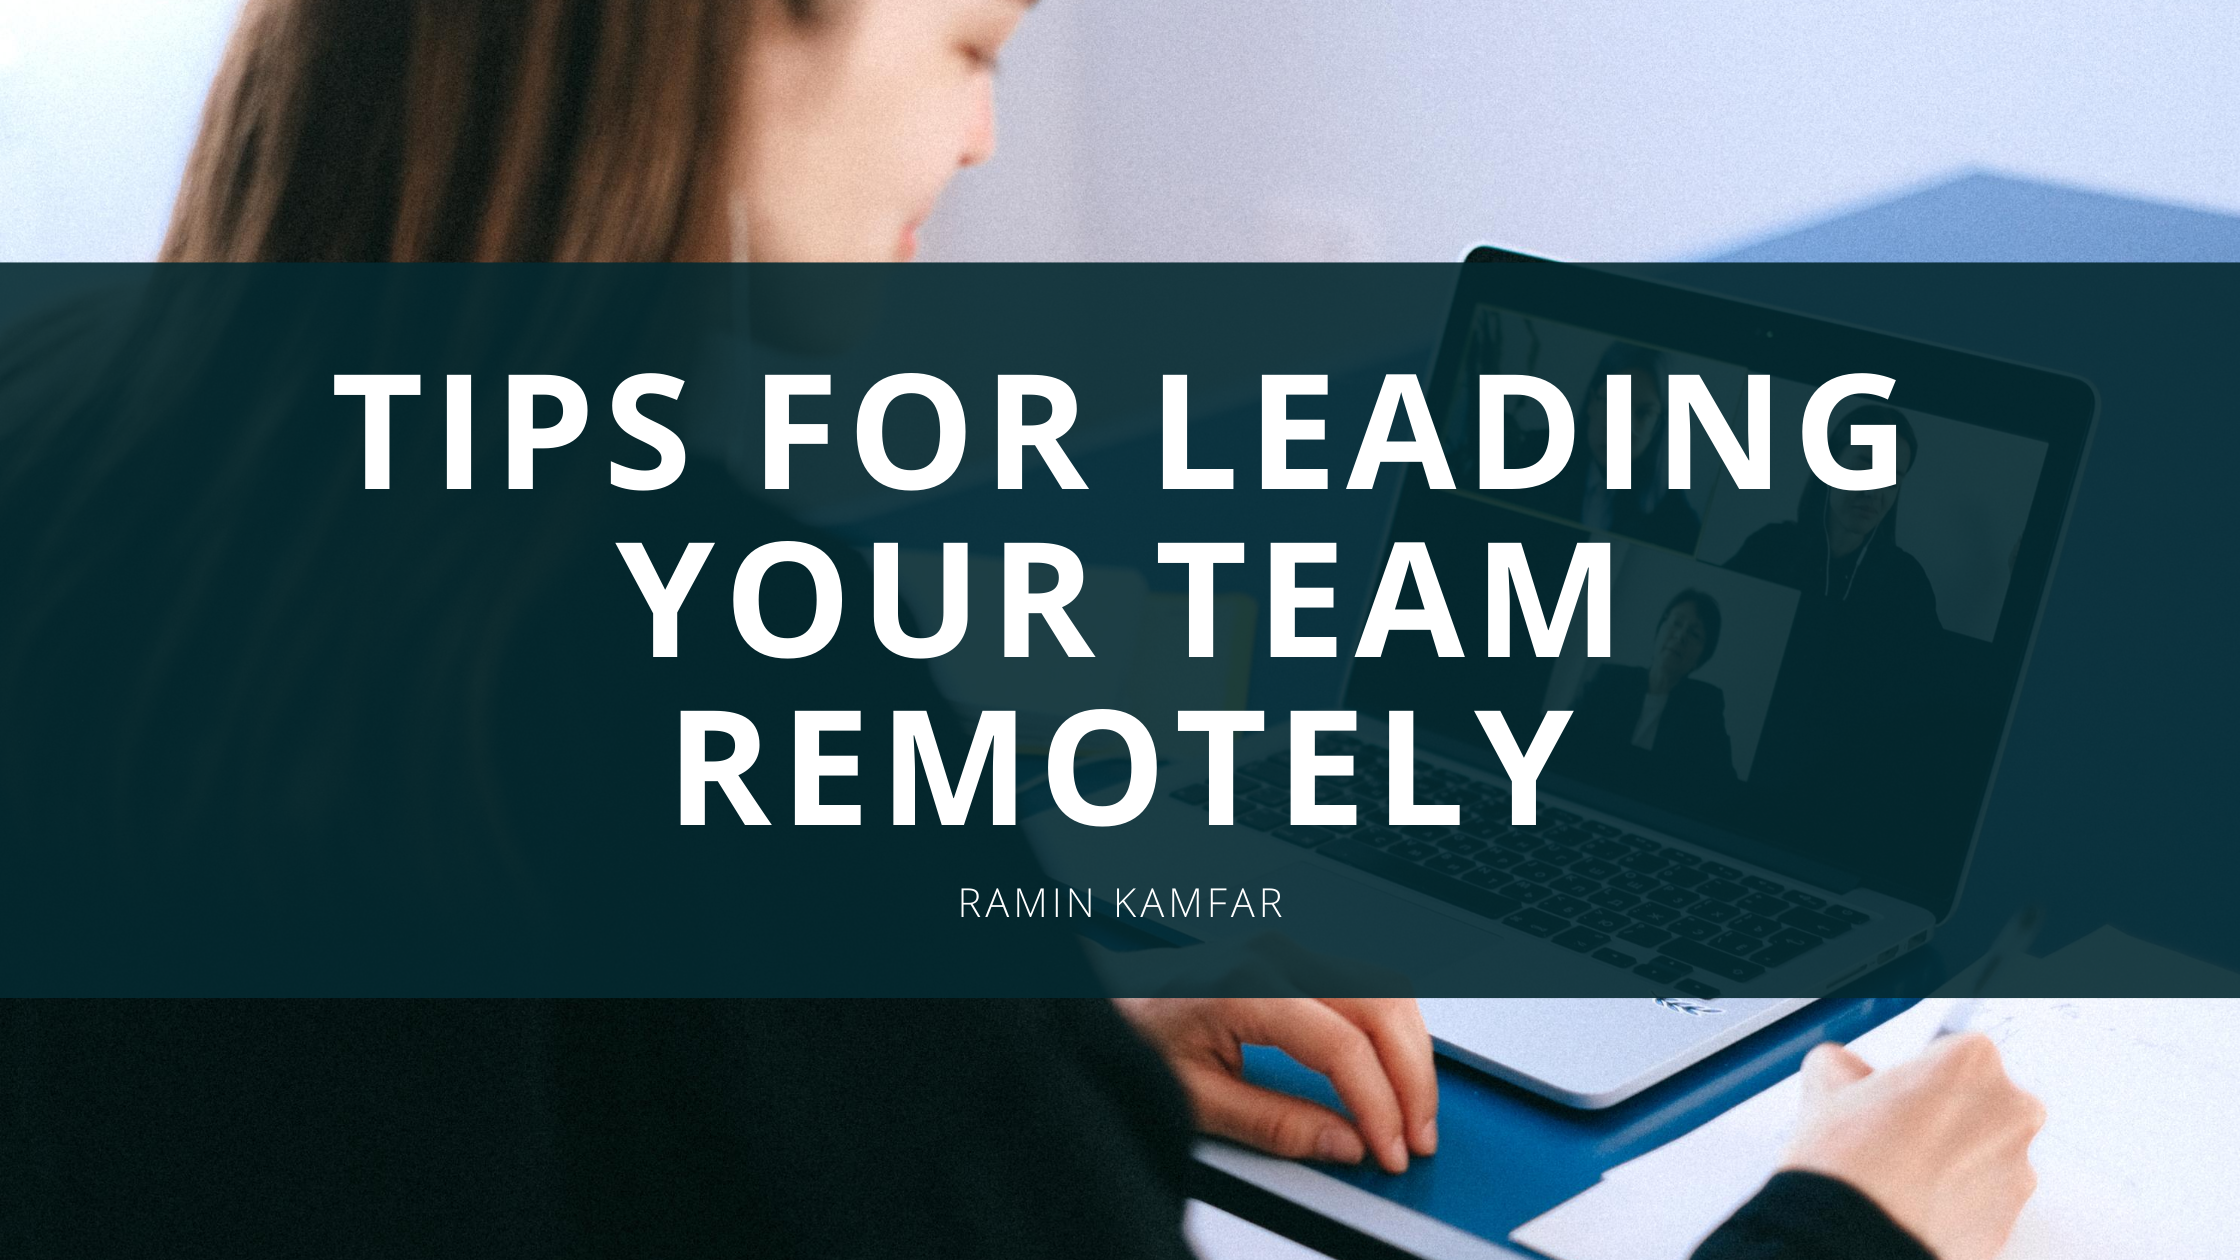 Ramin Kamfar - Tips For Leading Your Team Remotely